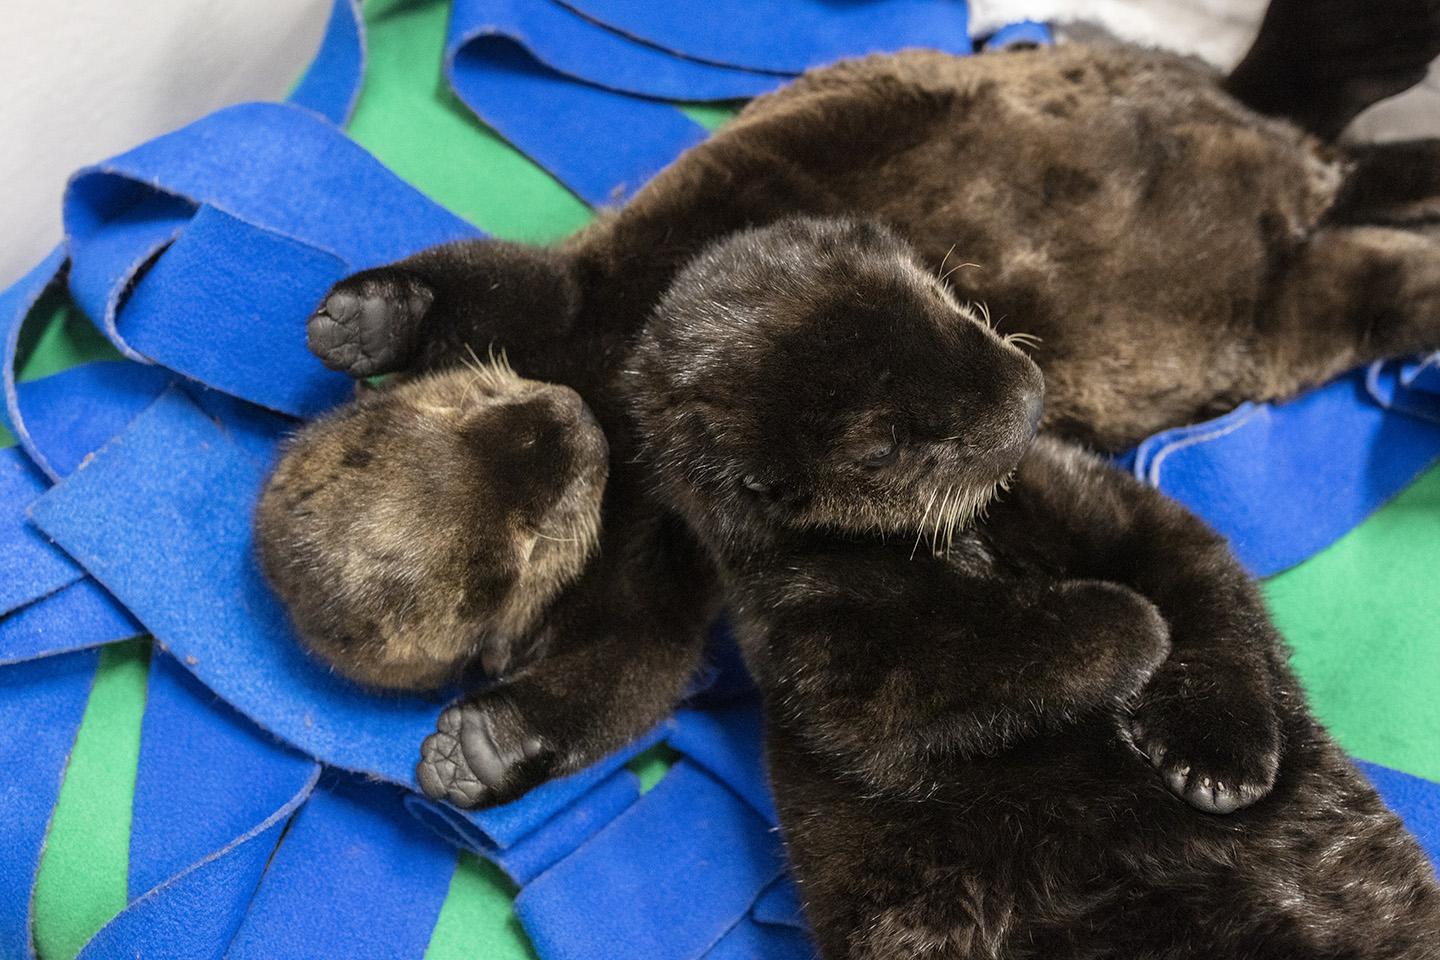 Shedd’s two sea otter pups often sleep next to each other. (Brenna Hernandez / Shedd Aquarium)